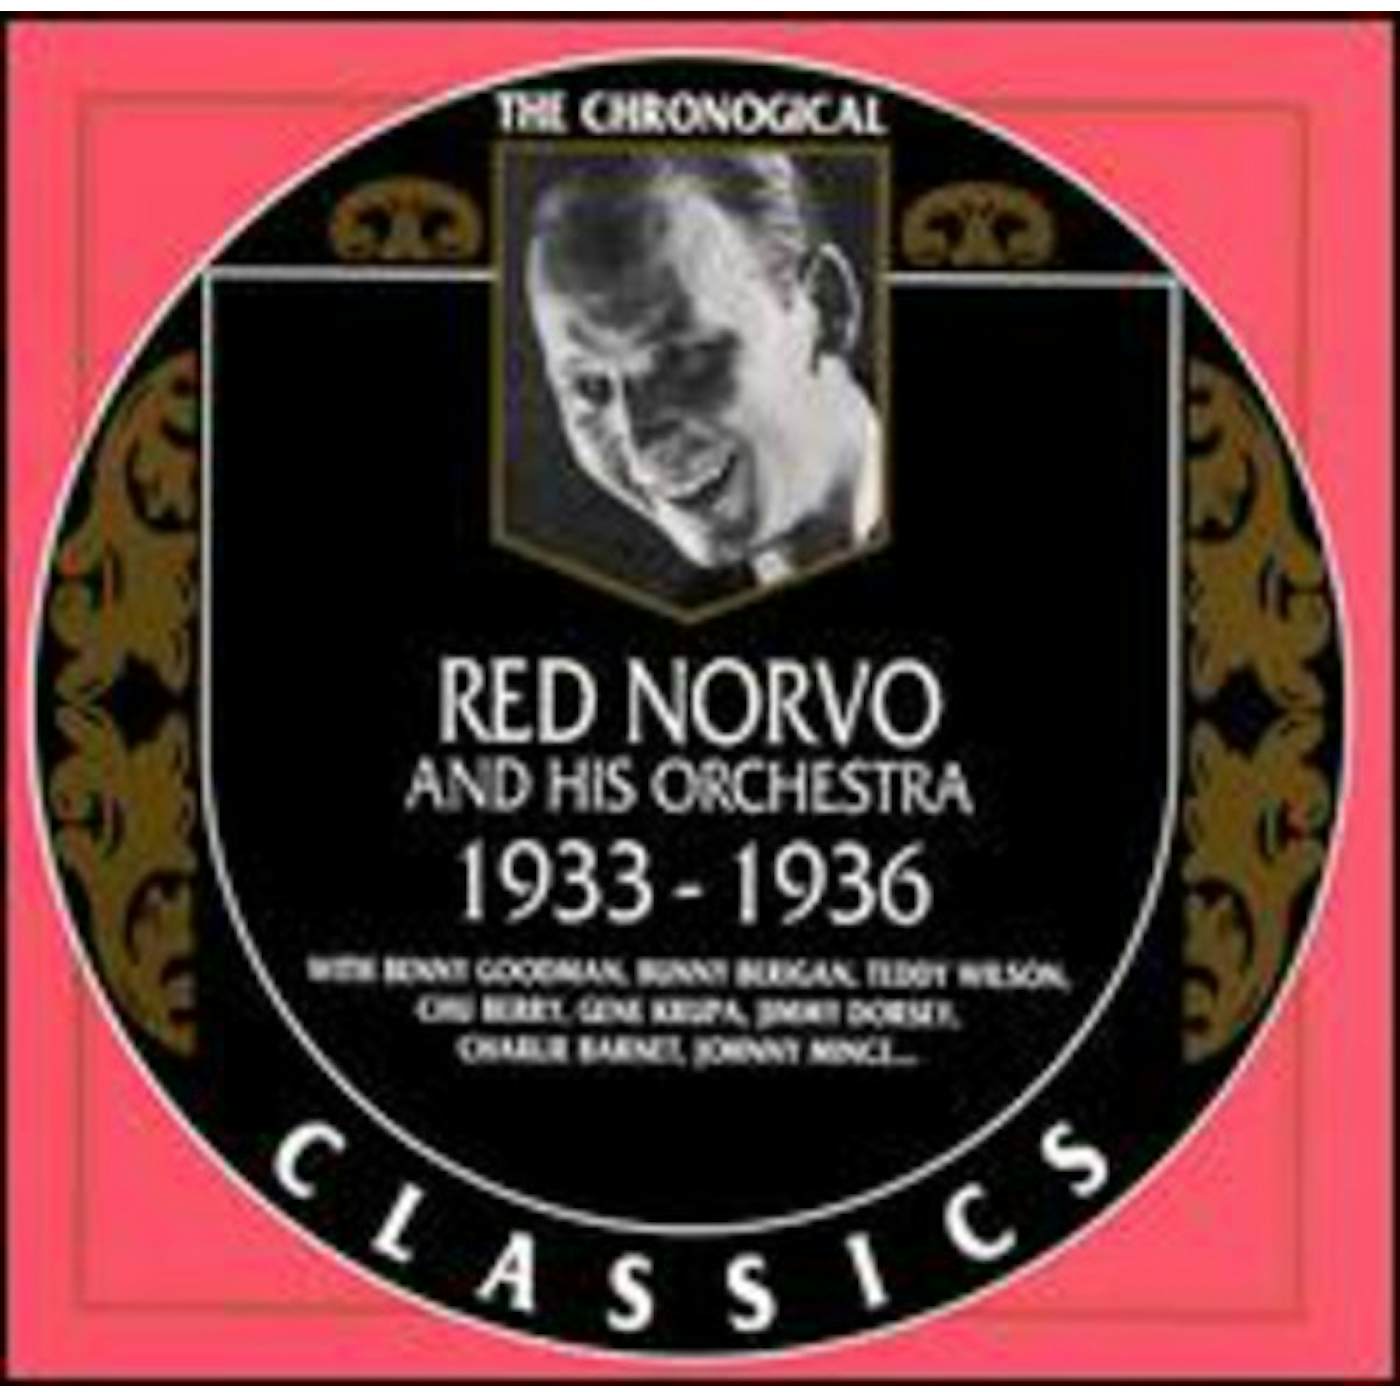 Red Norvo 1933-1936 CD